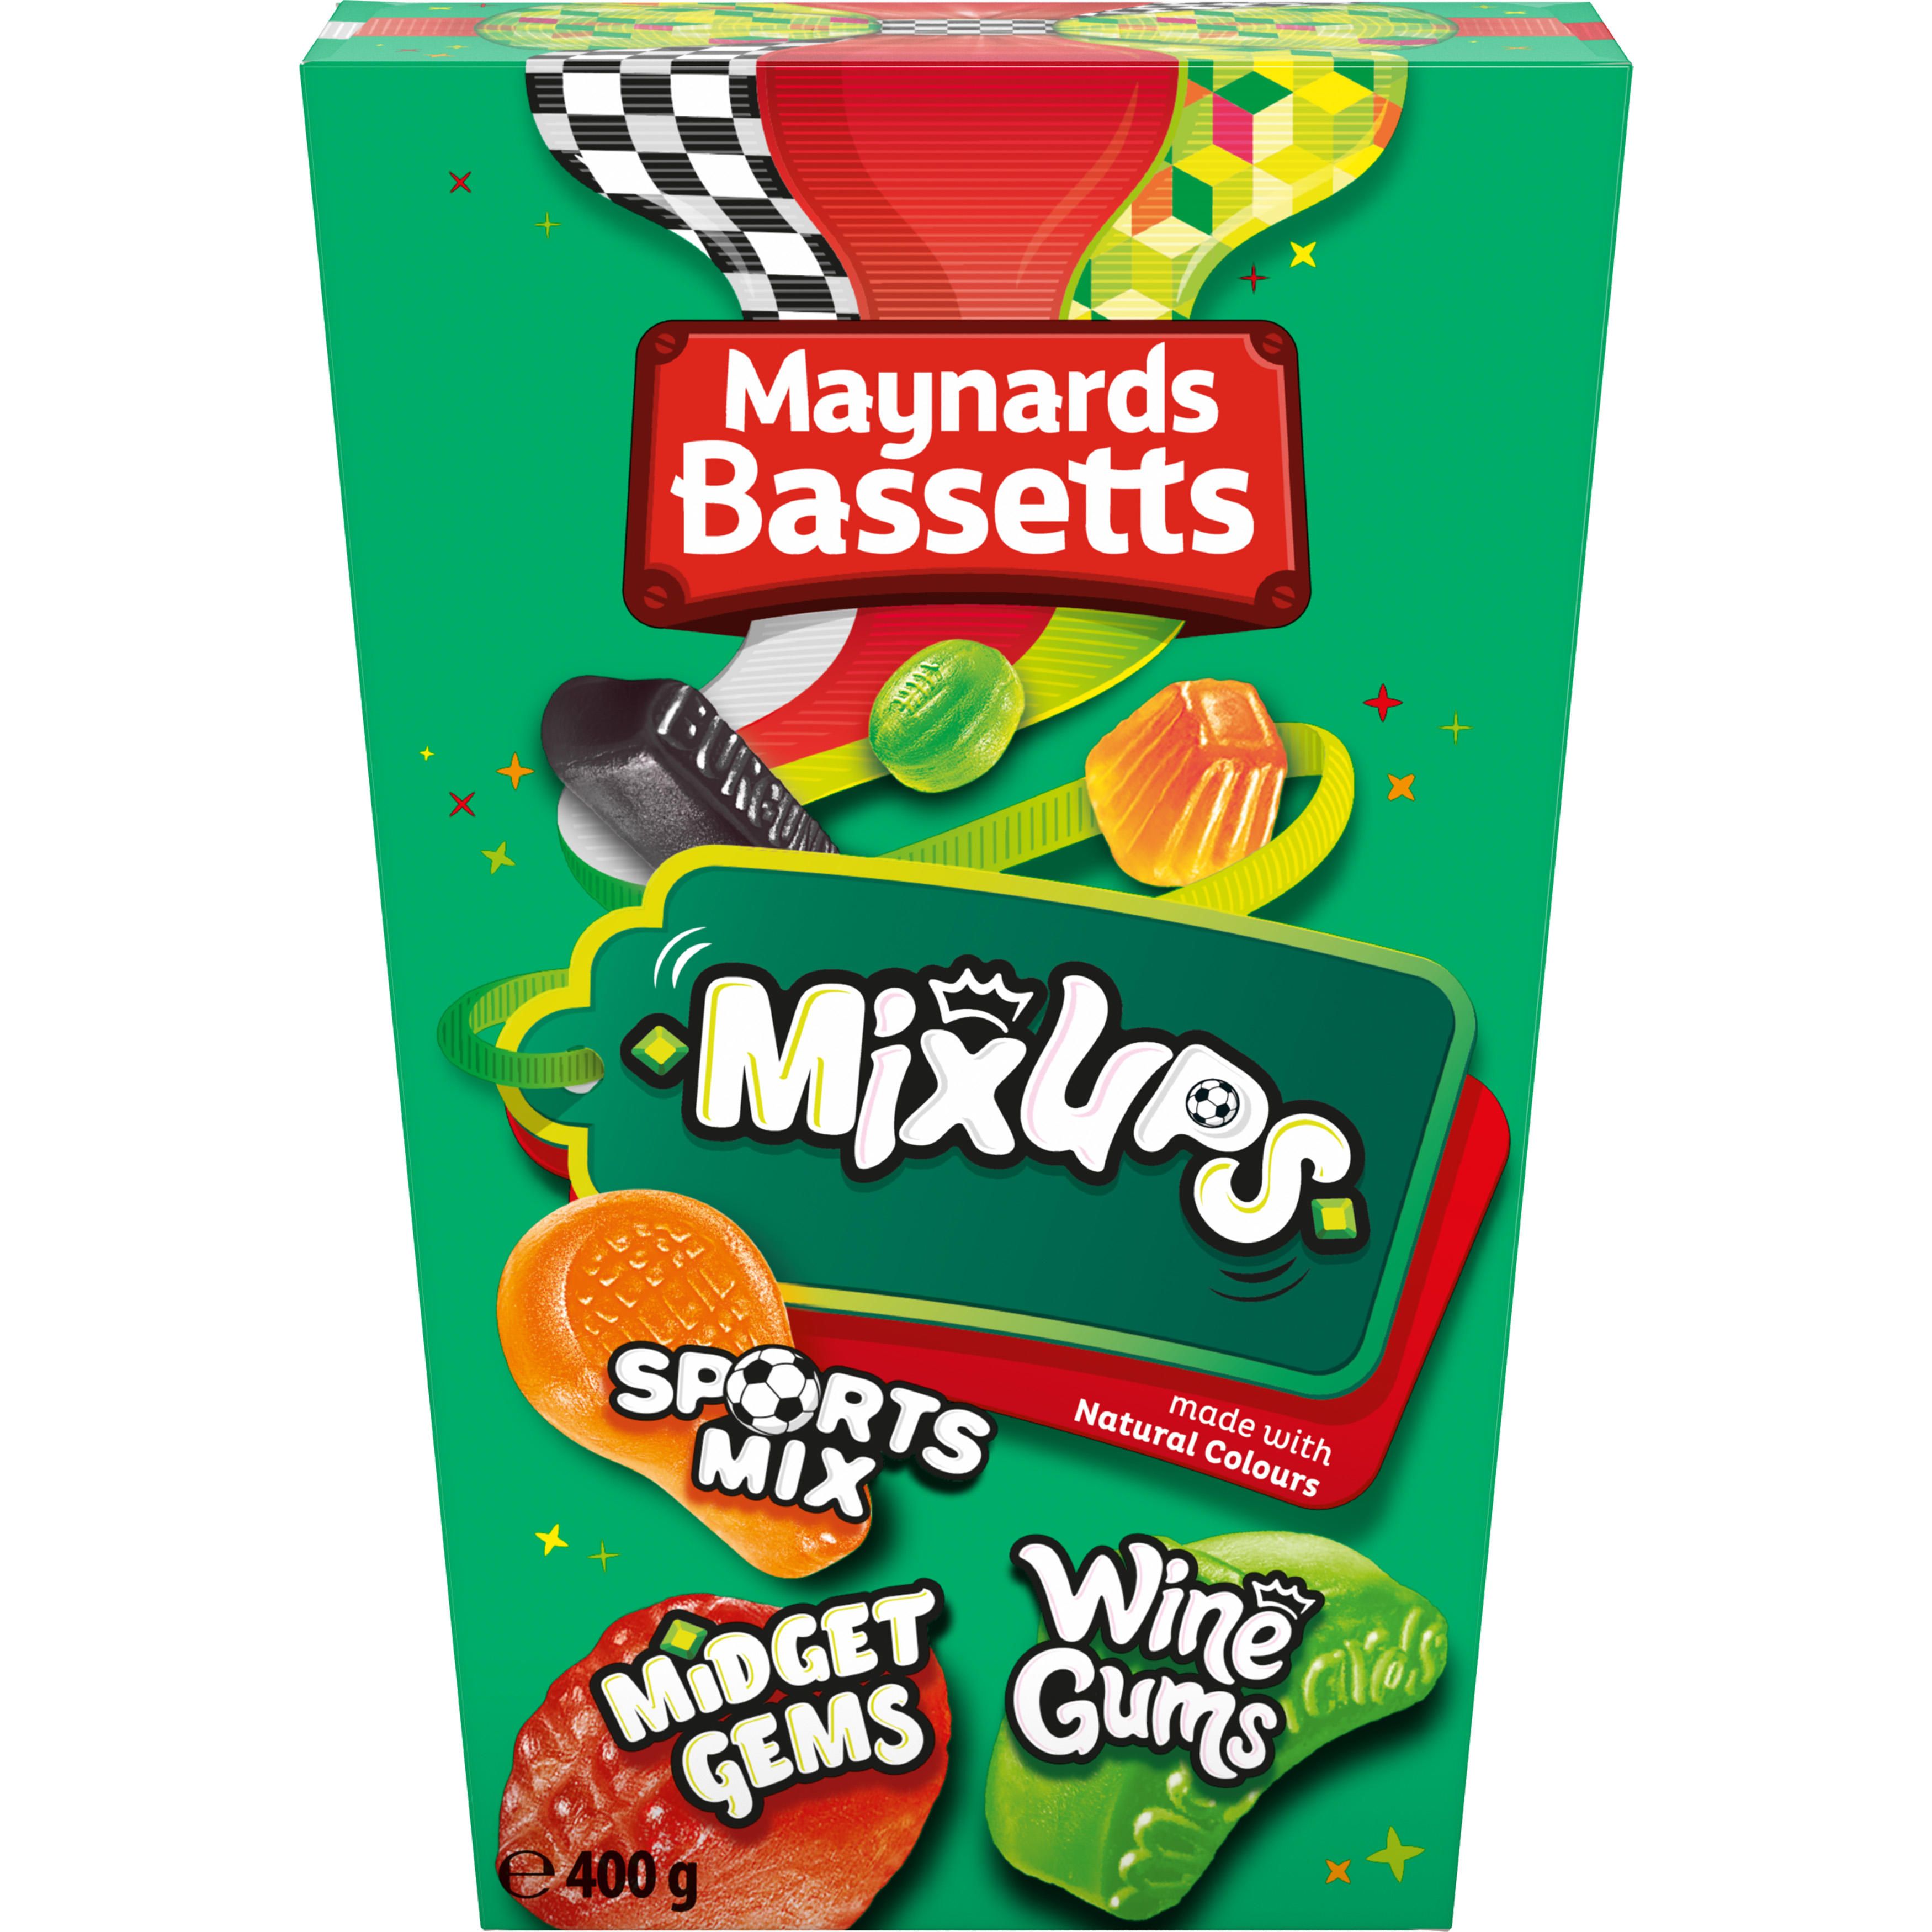 Maynards Bassetts Mix Ups Sweets Carton 400g